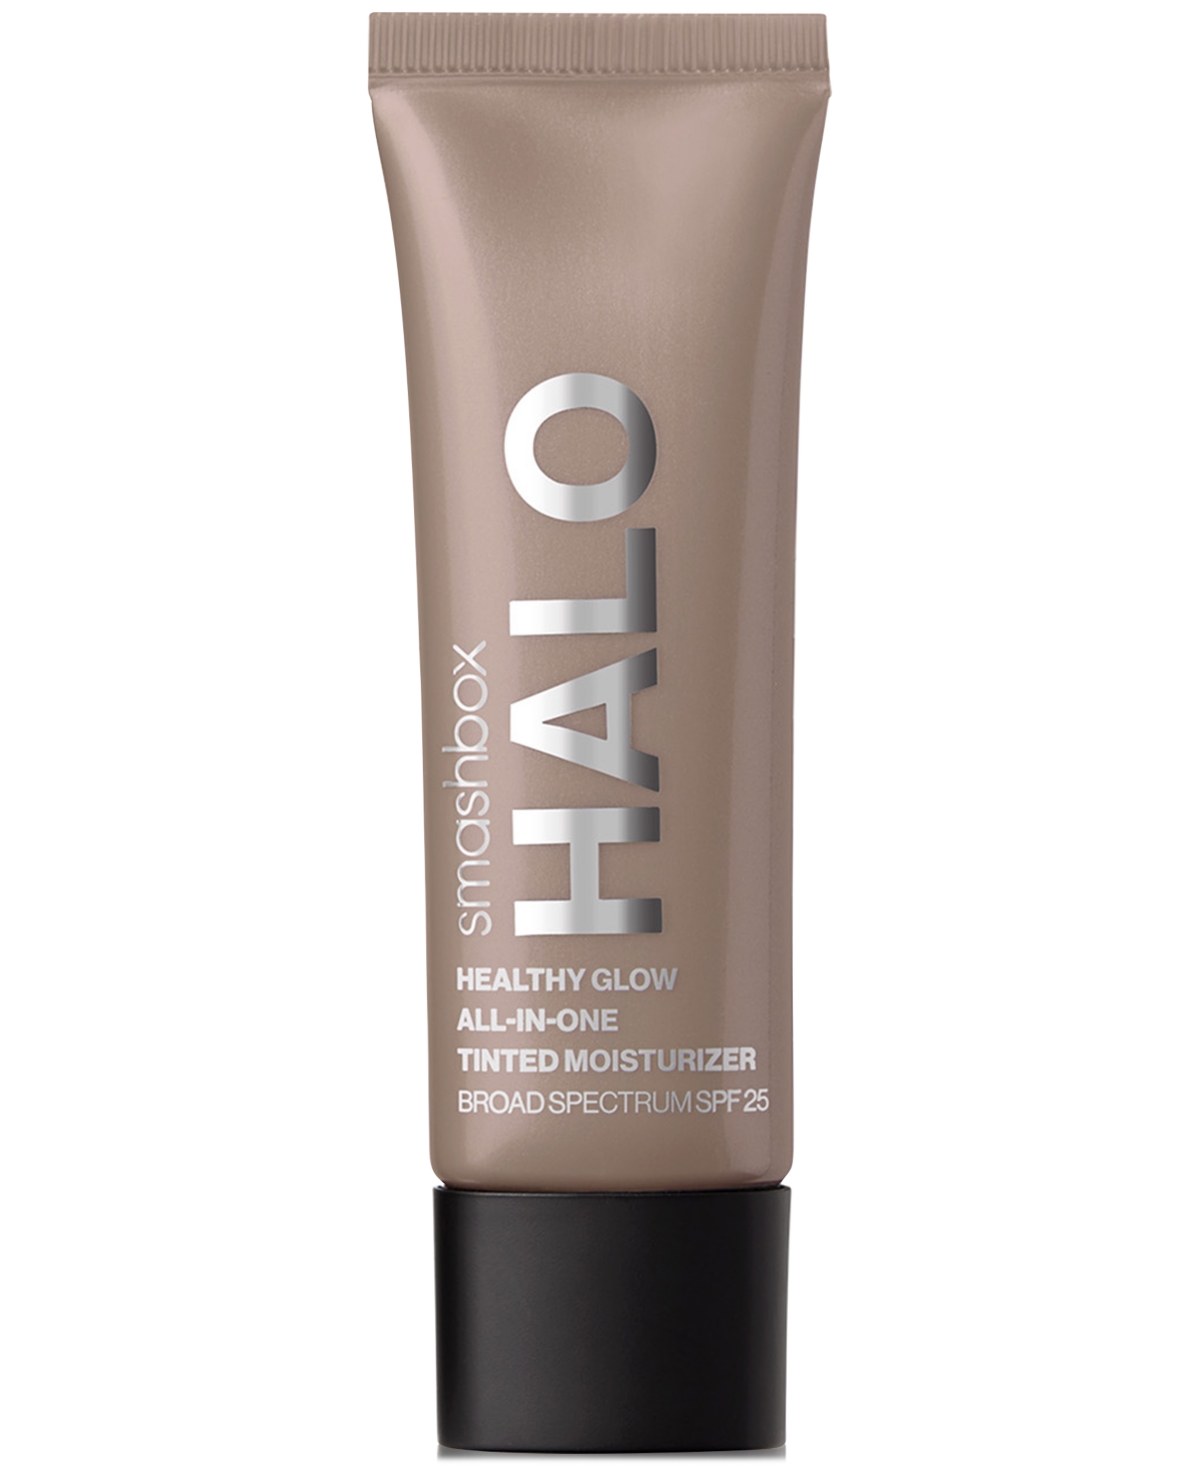 Smashbox Mini Halo Healthy Glow Tinted Moisturizer Spf 25, 0.41 Oz. In Tan (tan With A Neutral Undertone)